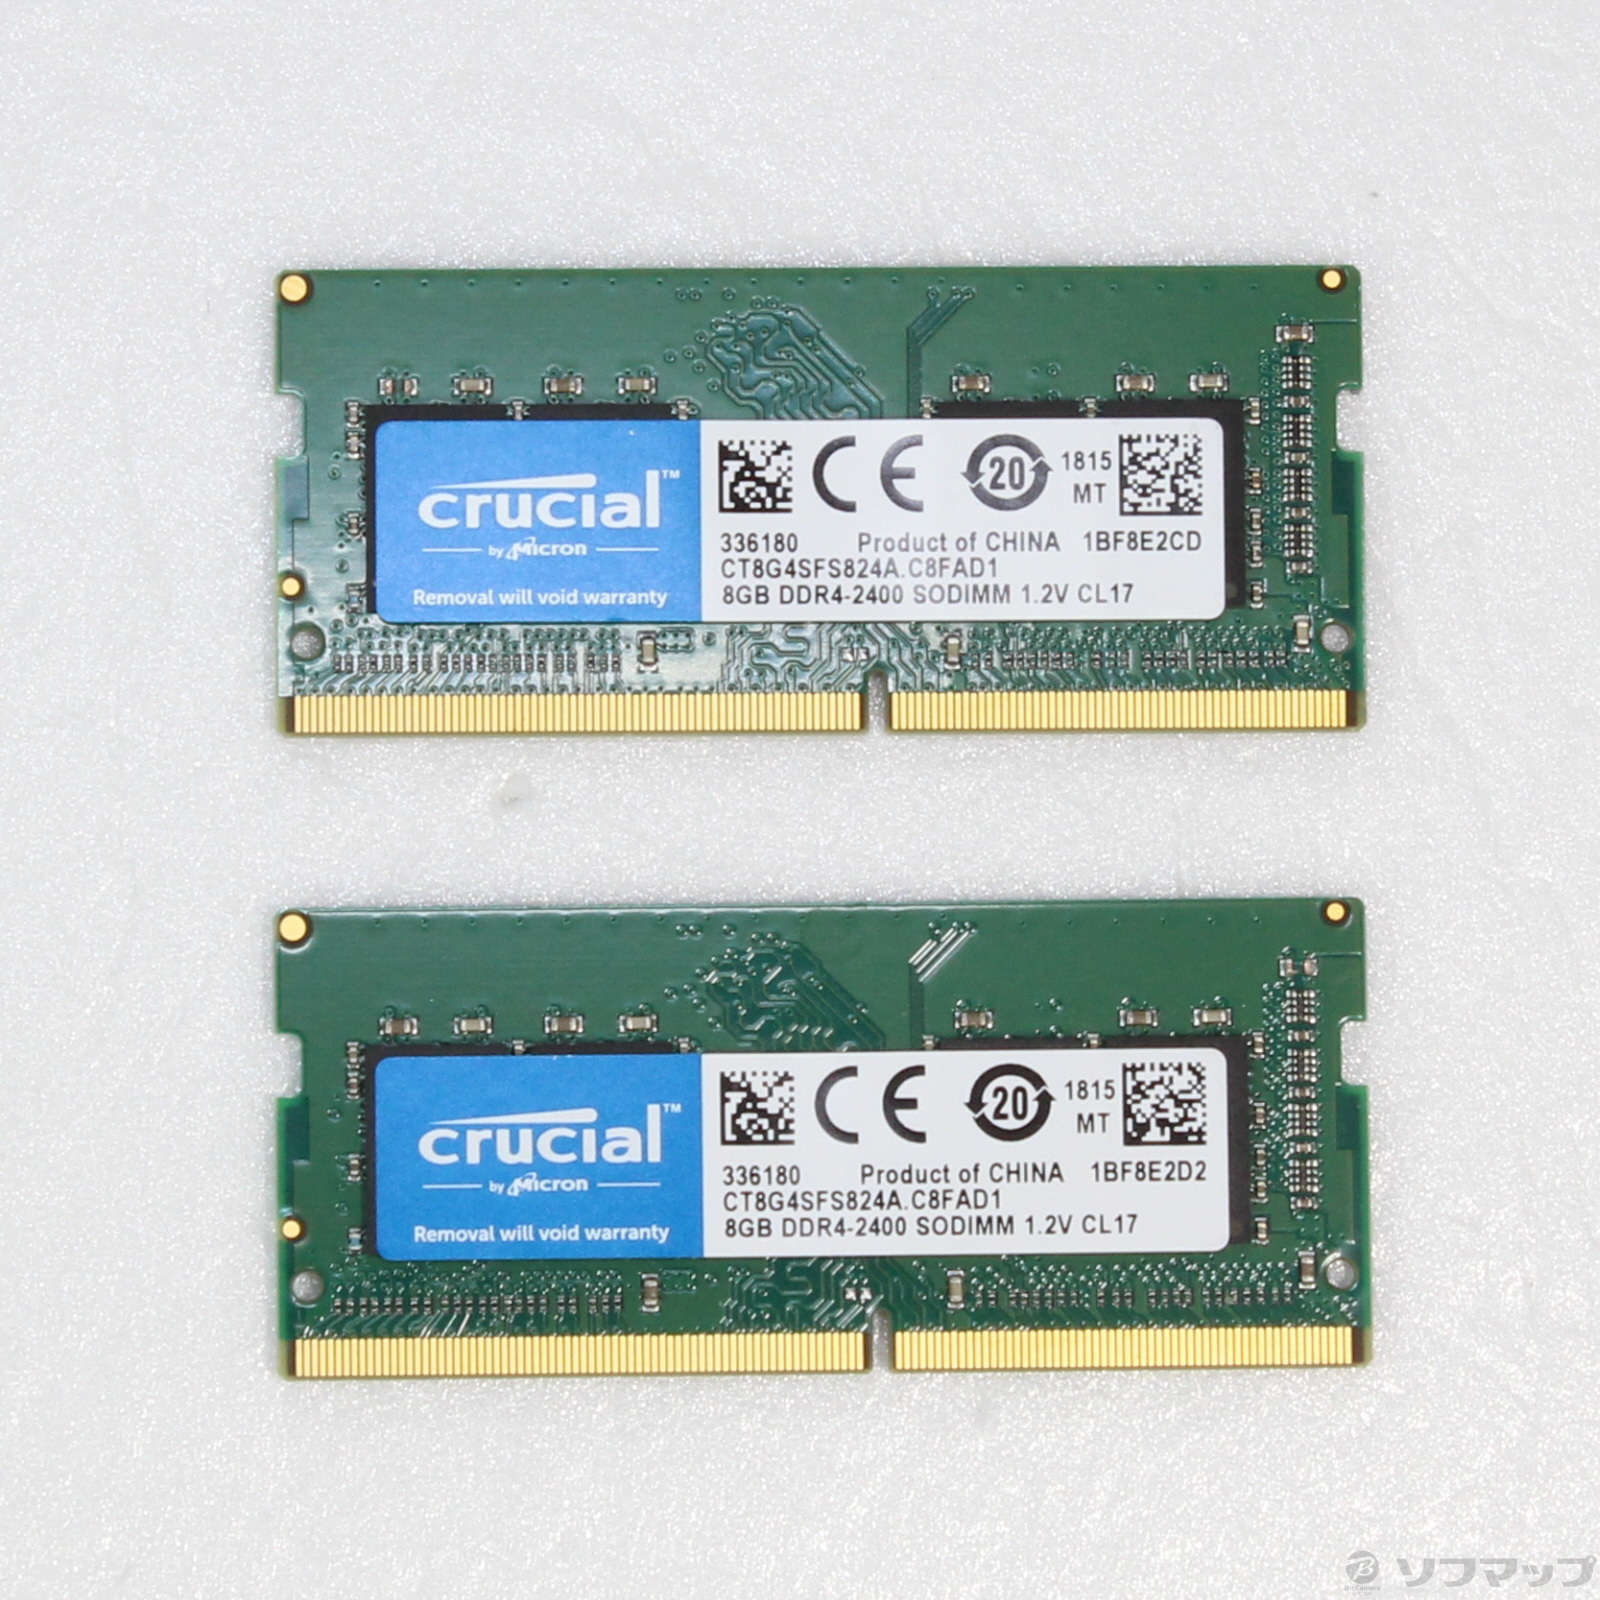 中古】260P SODIMM PC4-19200 DDR4-2400 16GB 8GB×2枚組 ...